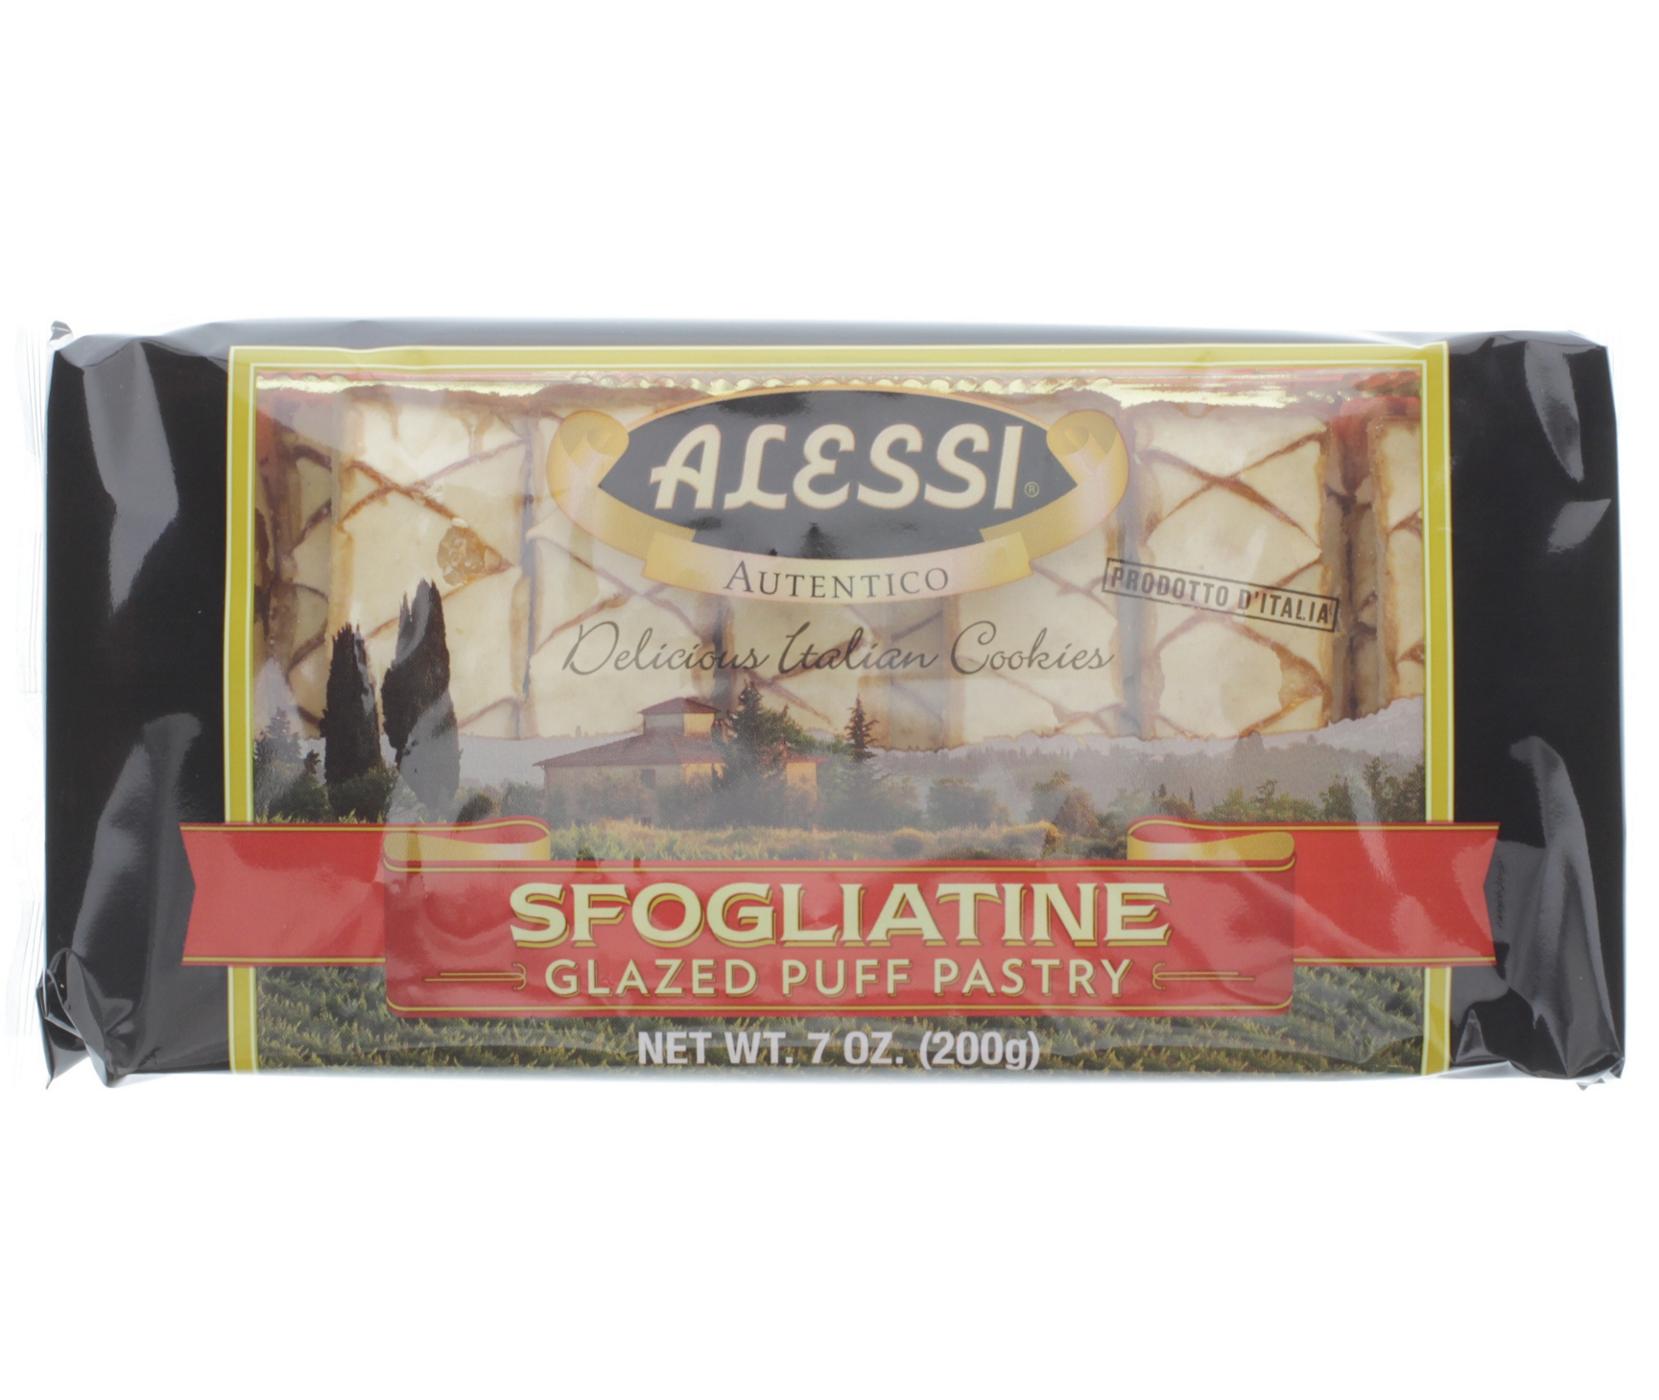 Alessi Sfogliatine Italian Cookies; image 2 of 3